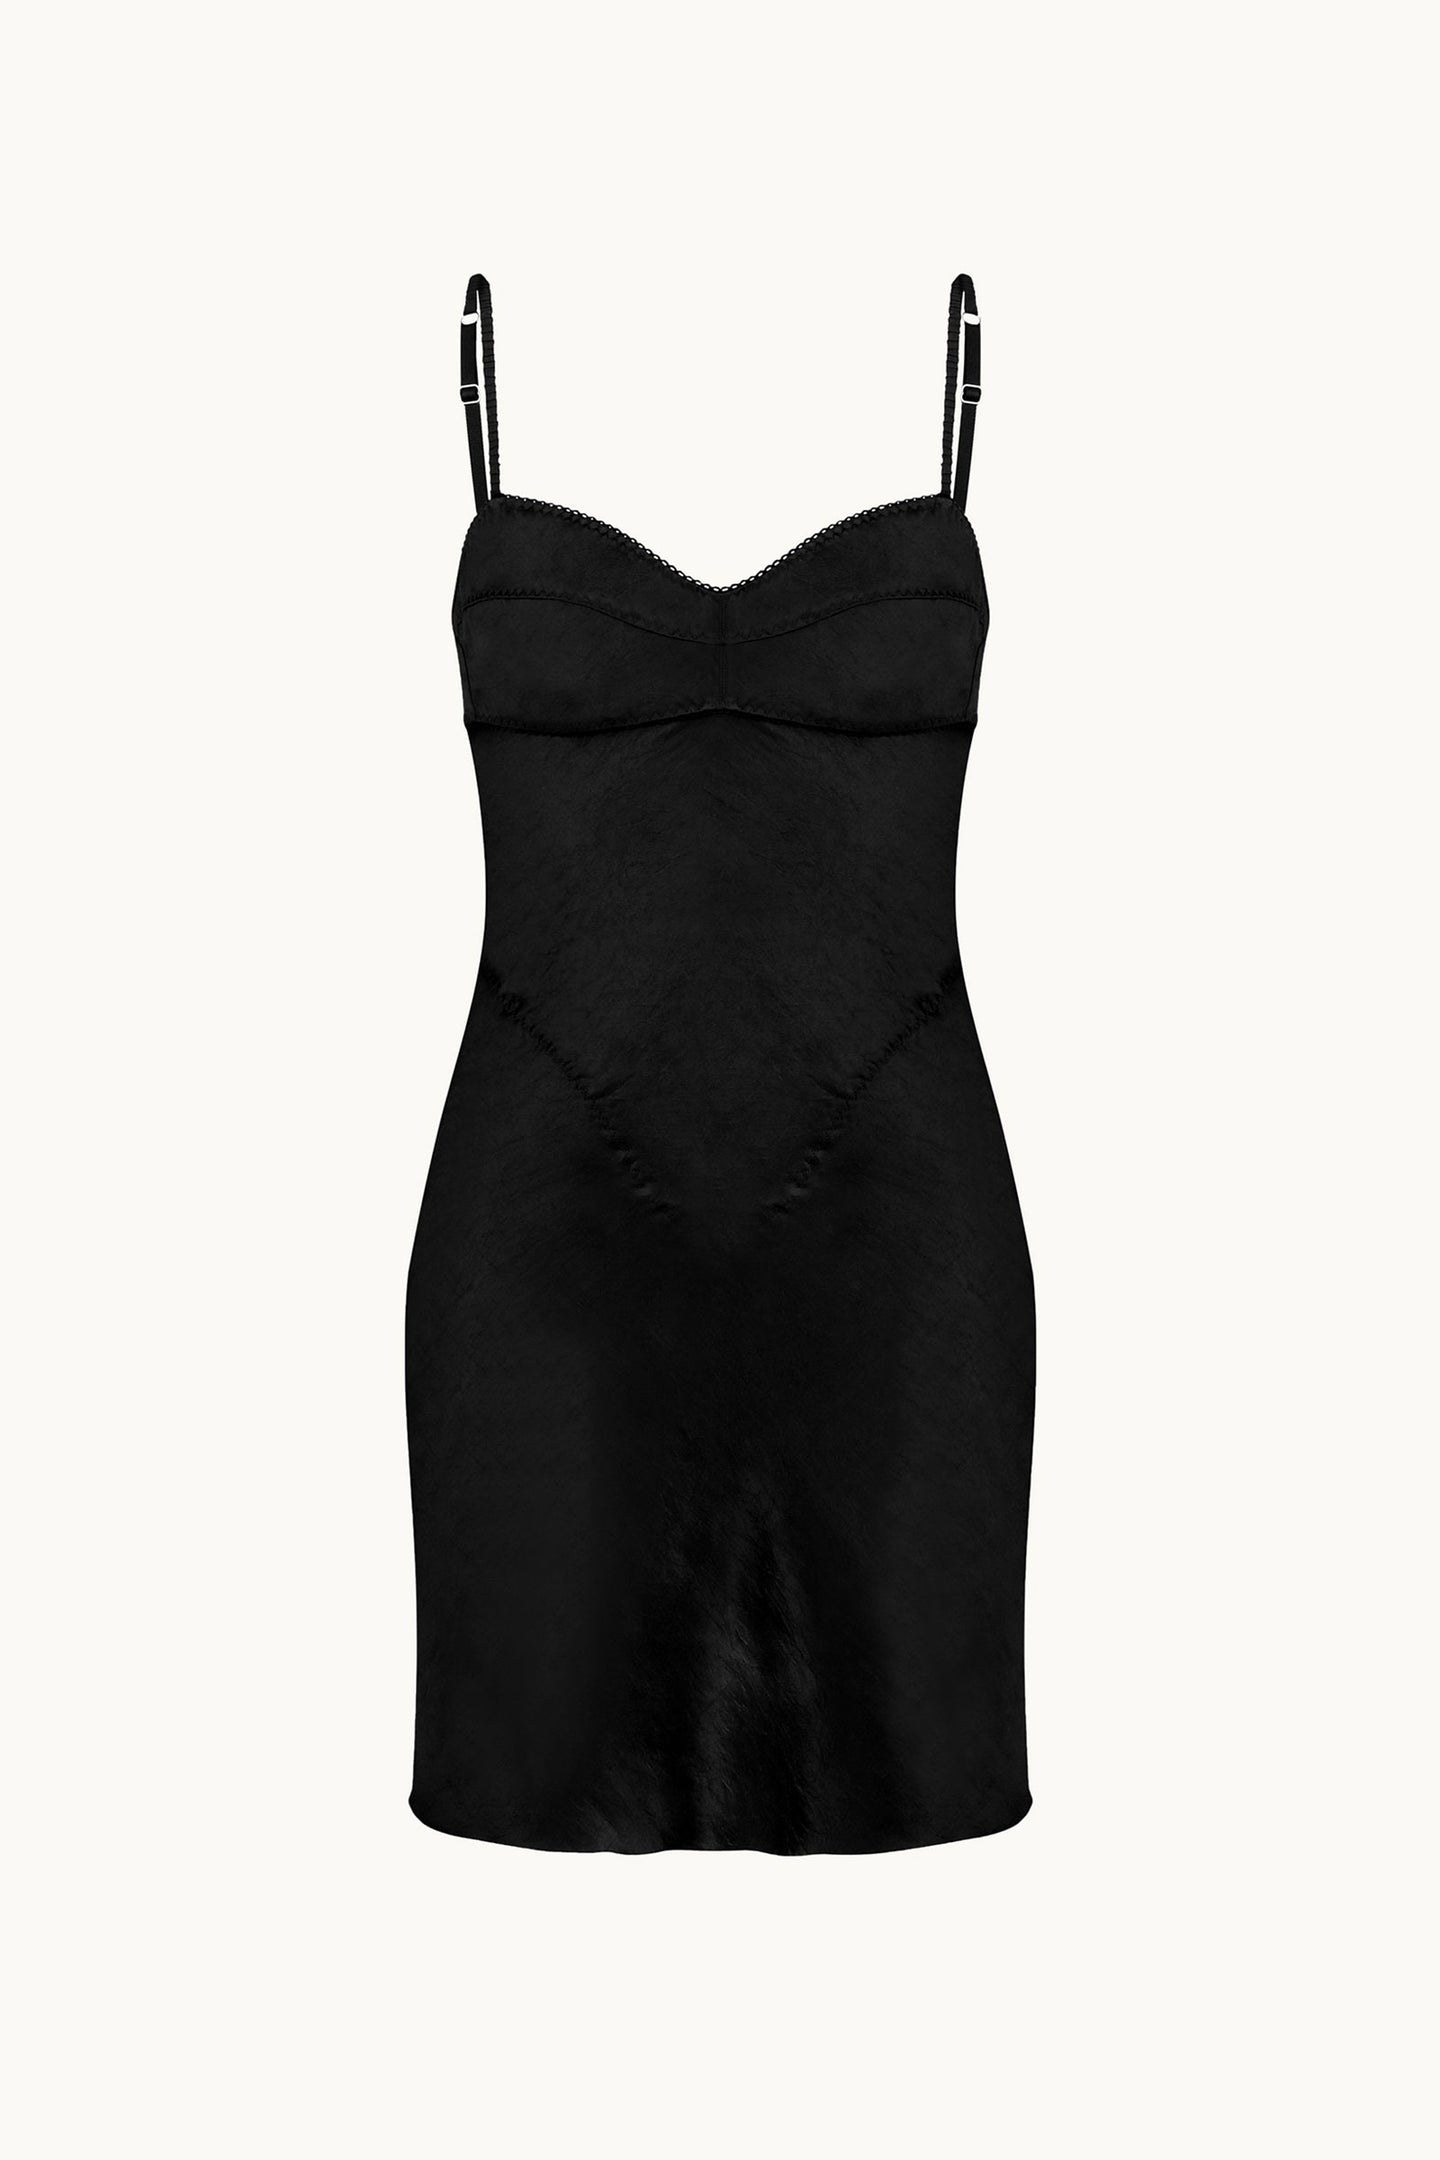 Mini Waterlily black dress front view